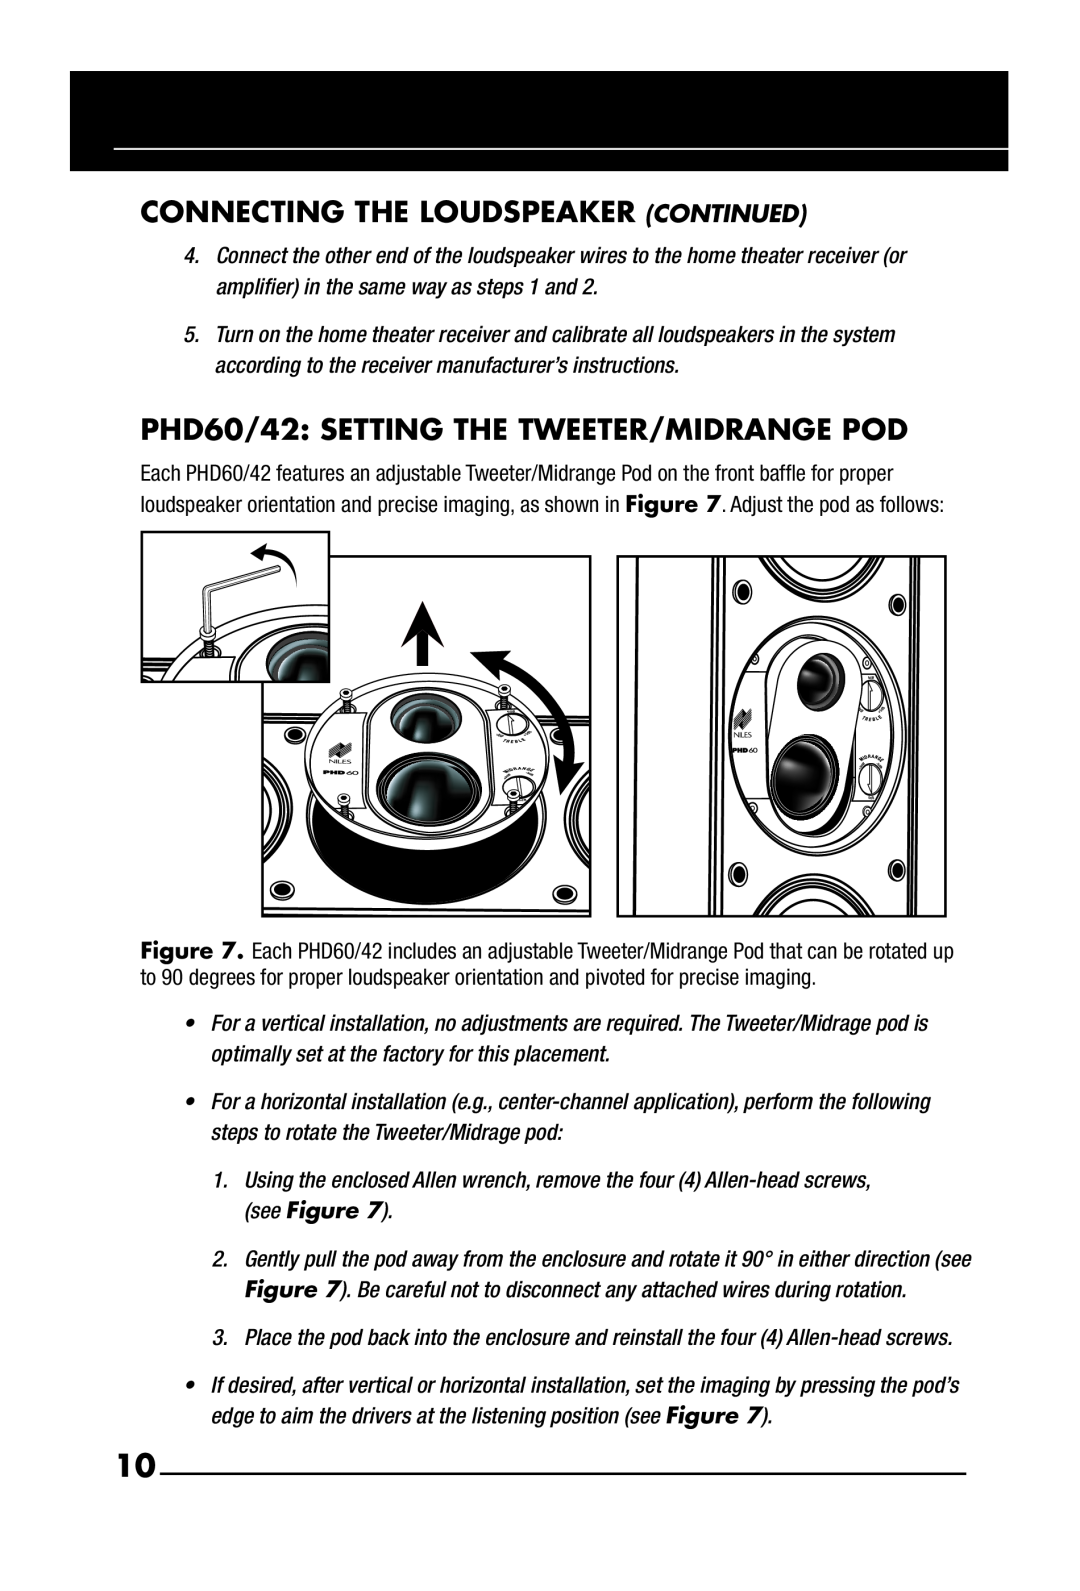 Niles Audio PHD30, PHD42 manual Connecting The Loudspeaker Continued, PHD60/42 SETTING THE TWEETER/MIDRANGE POD 